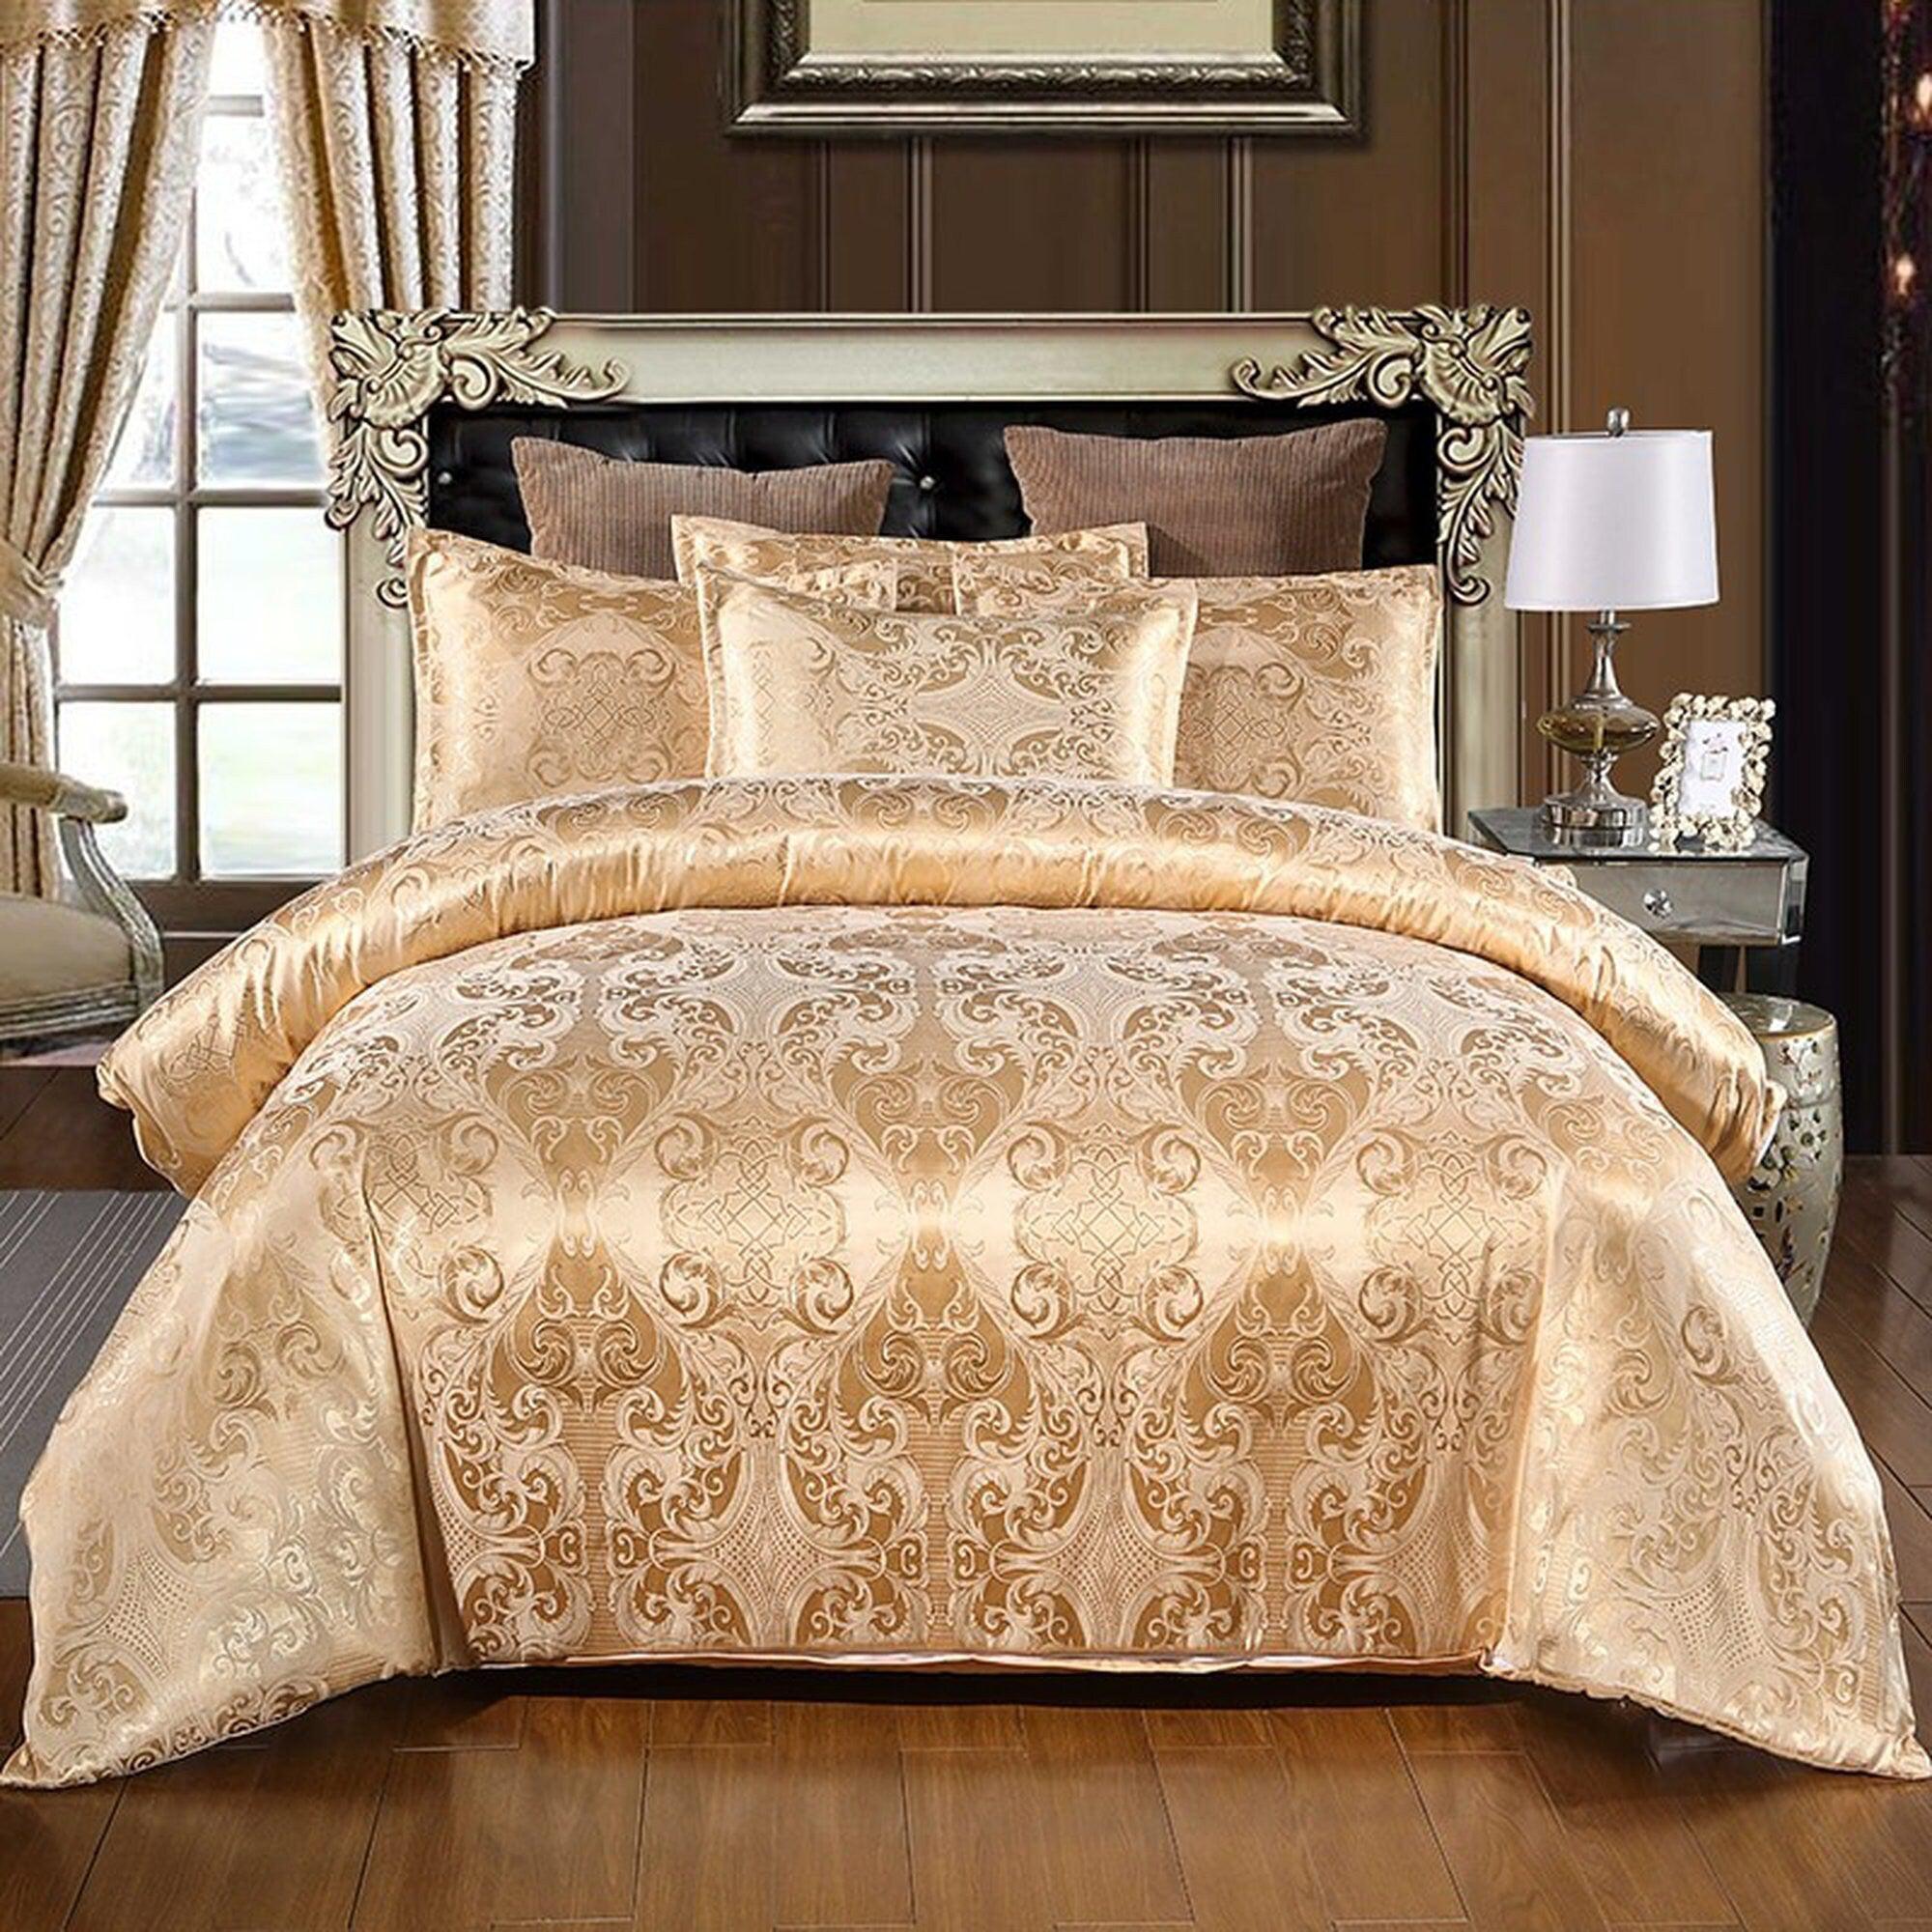 daintyduvet Beige Luxury Bedding made with Silky Jacquard Fabric, Damask Duvet Cover Set, Designer Bedding, Aesthetic Duvet King Queen Full Twin